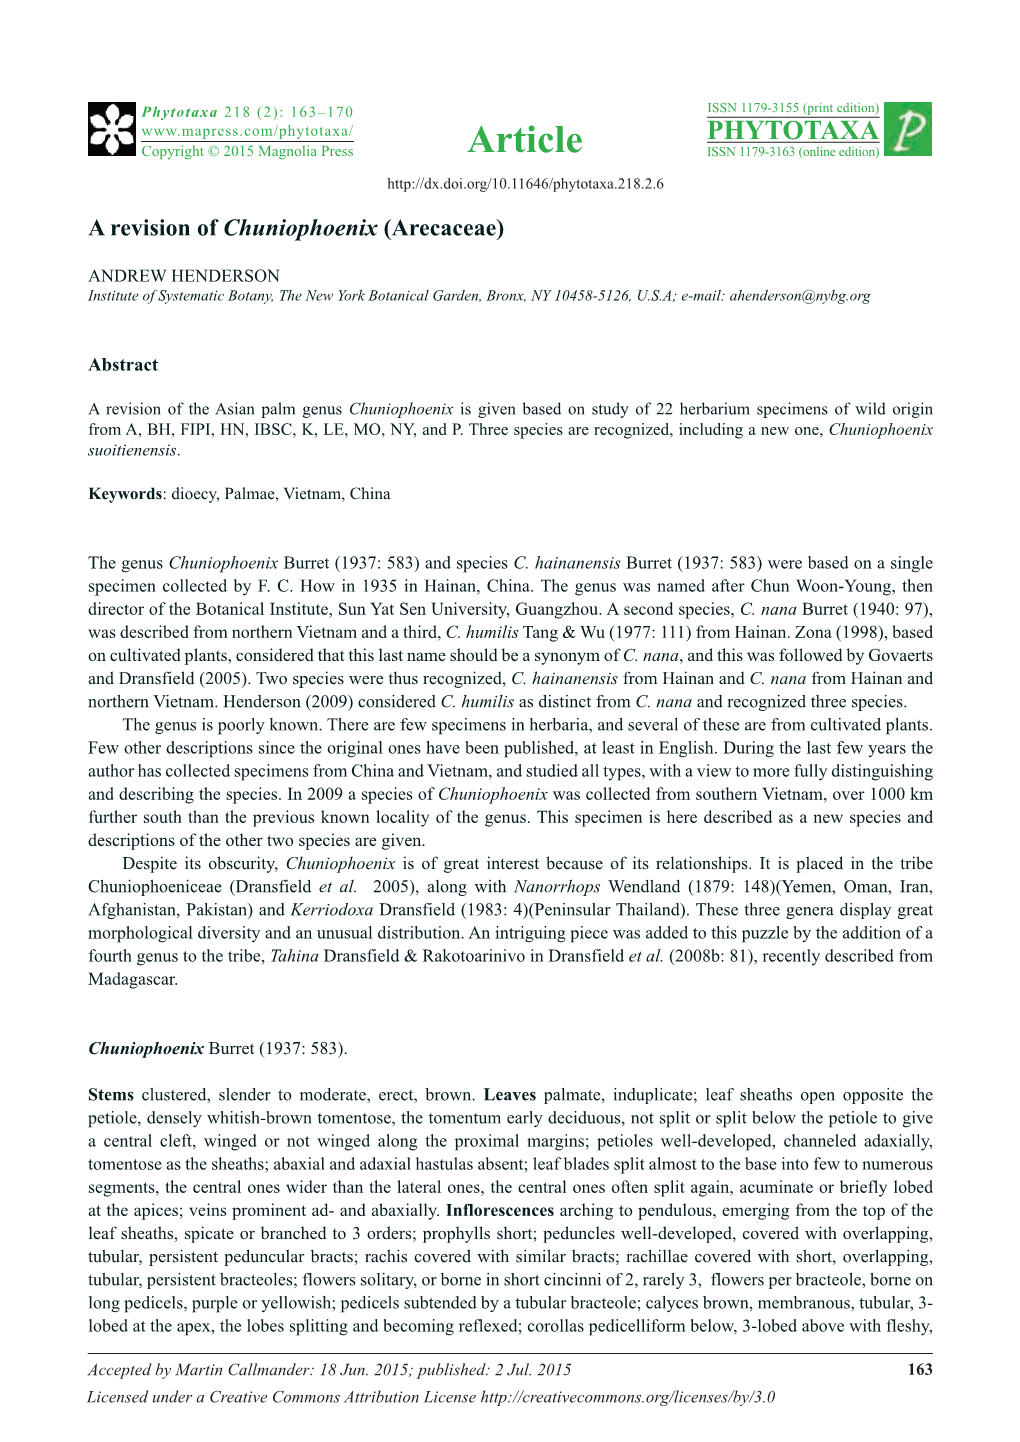 A Revision of Chuniophoenix (Arecaceae)